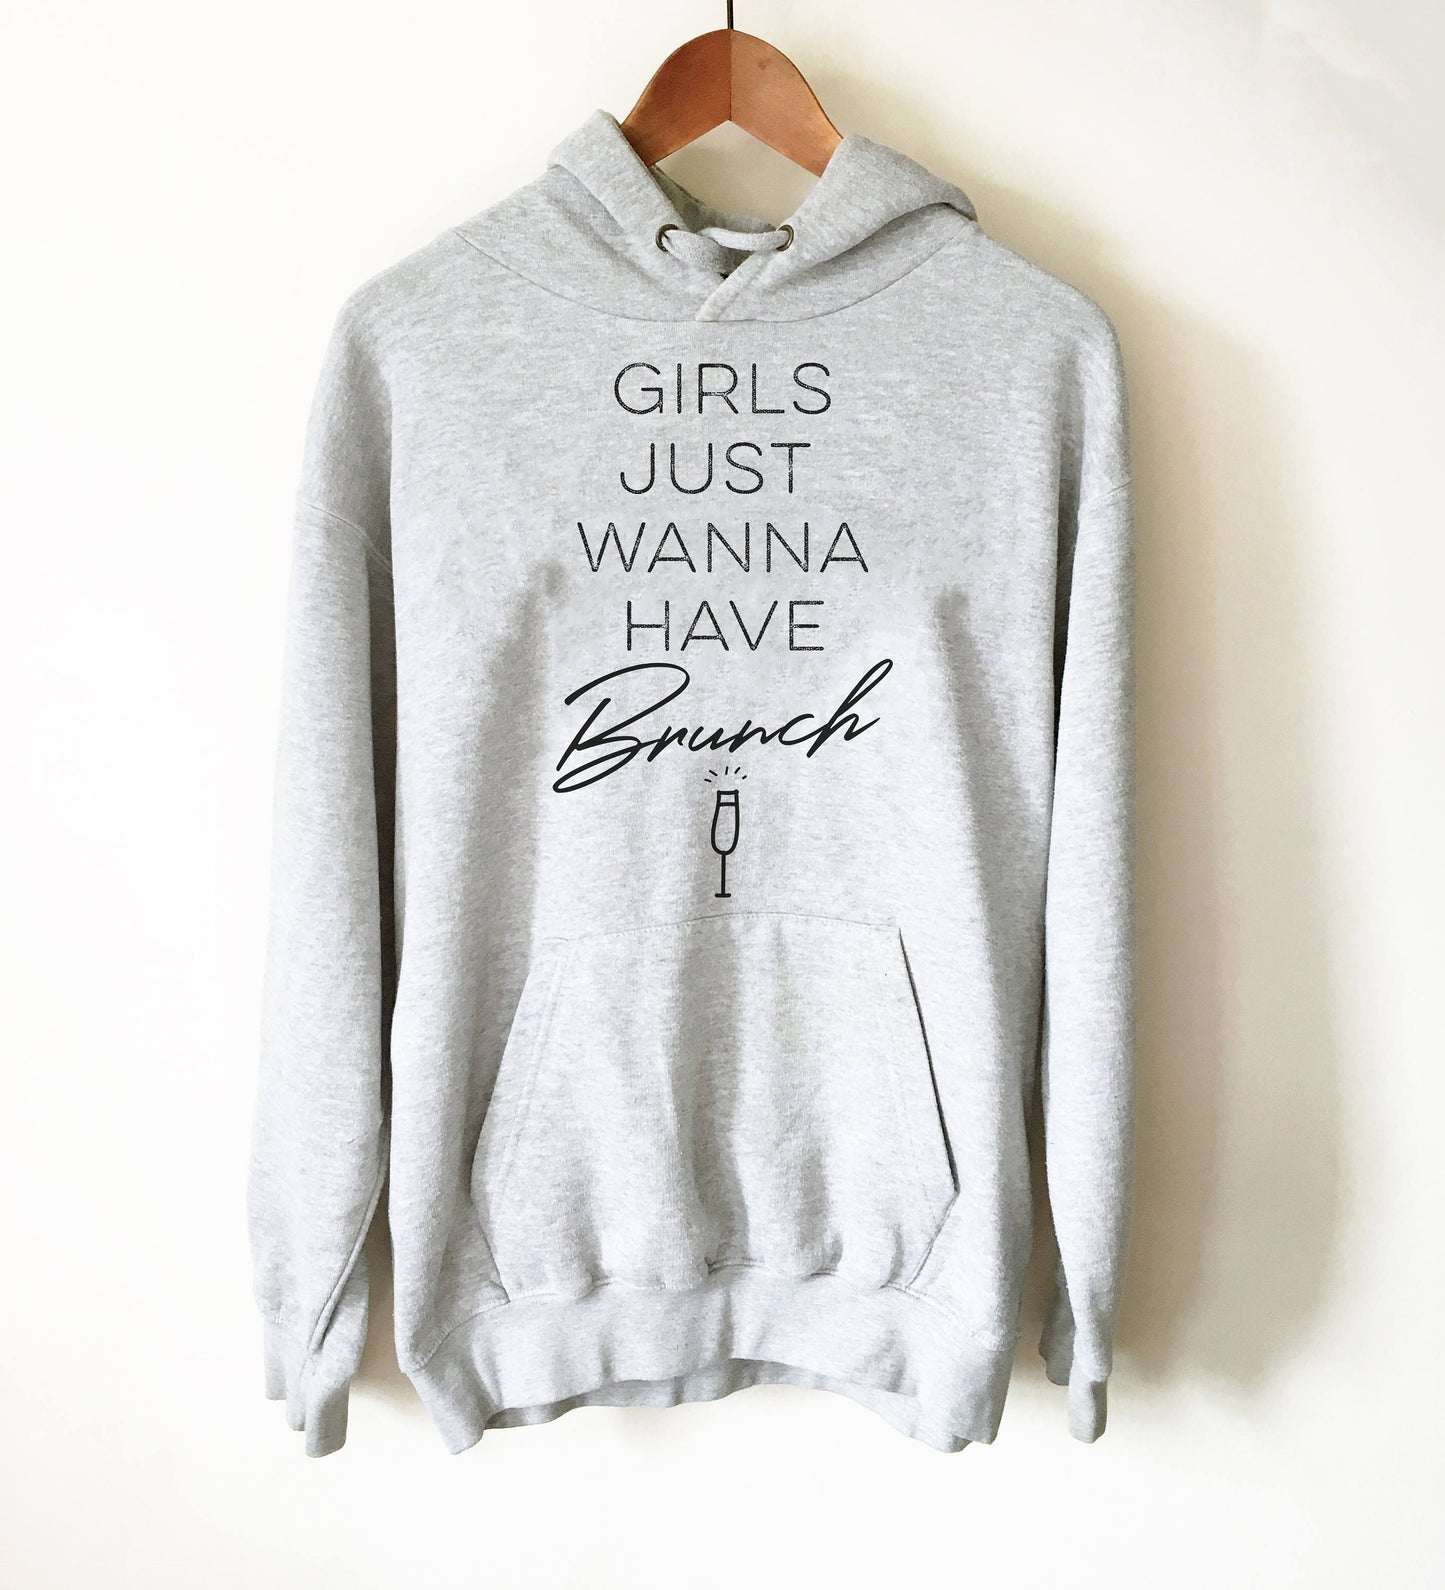 Girls Just Wanna Have Brunch Hoodie - Brunch shirt | Sunday brunch shirt | Brunch and bubbly | Funny brunch shirt | Breakfast shirt